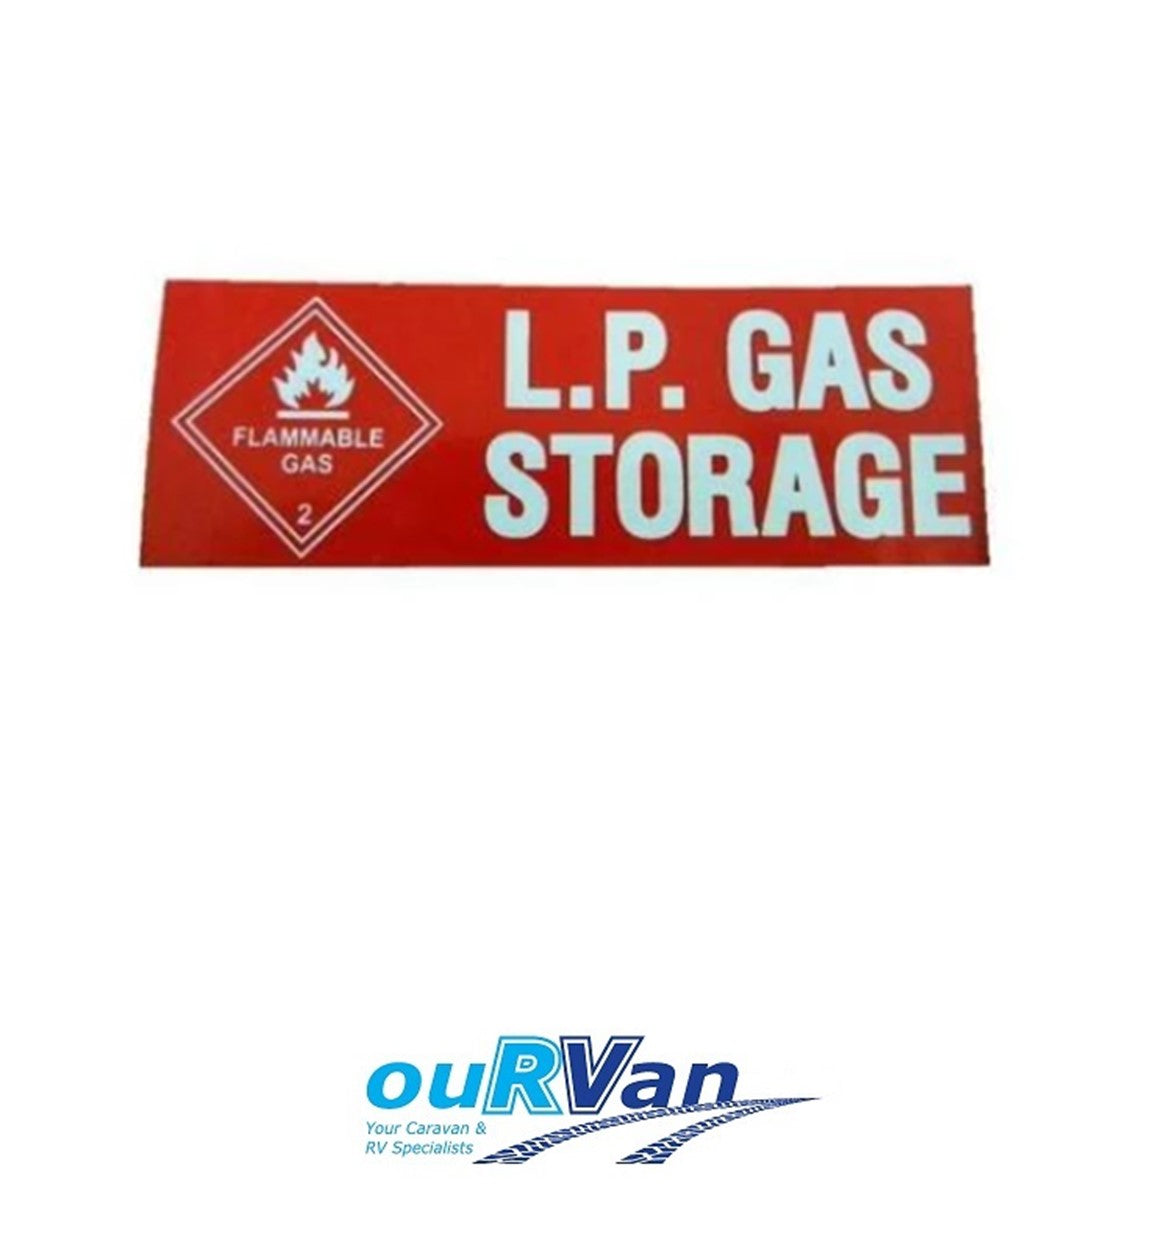 LPG Gas Storage Sticker For Caravan RV Motorhome Camper Trailer